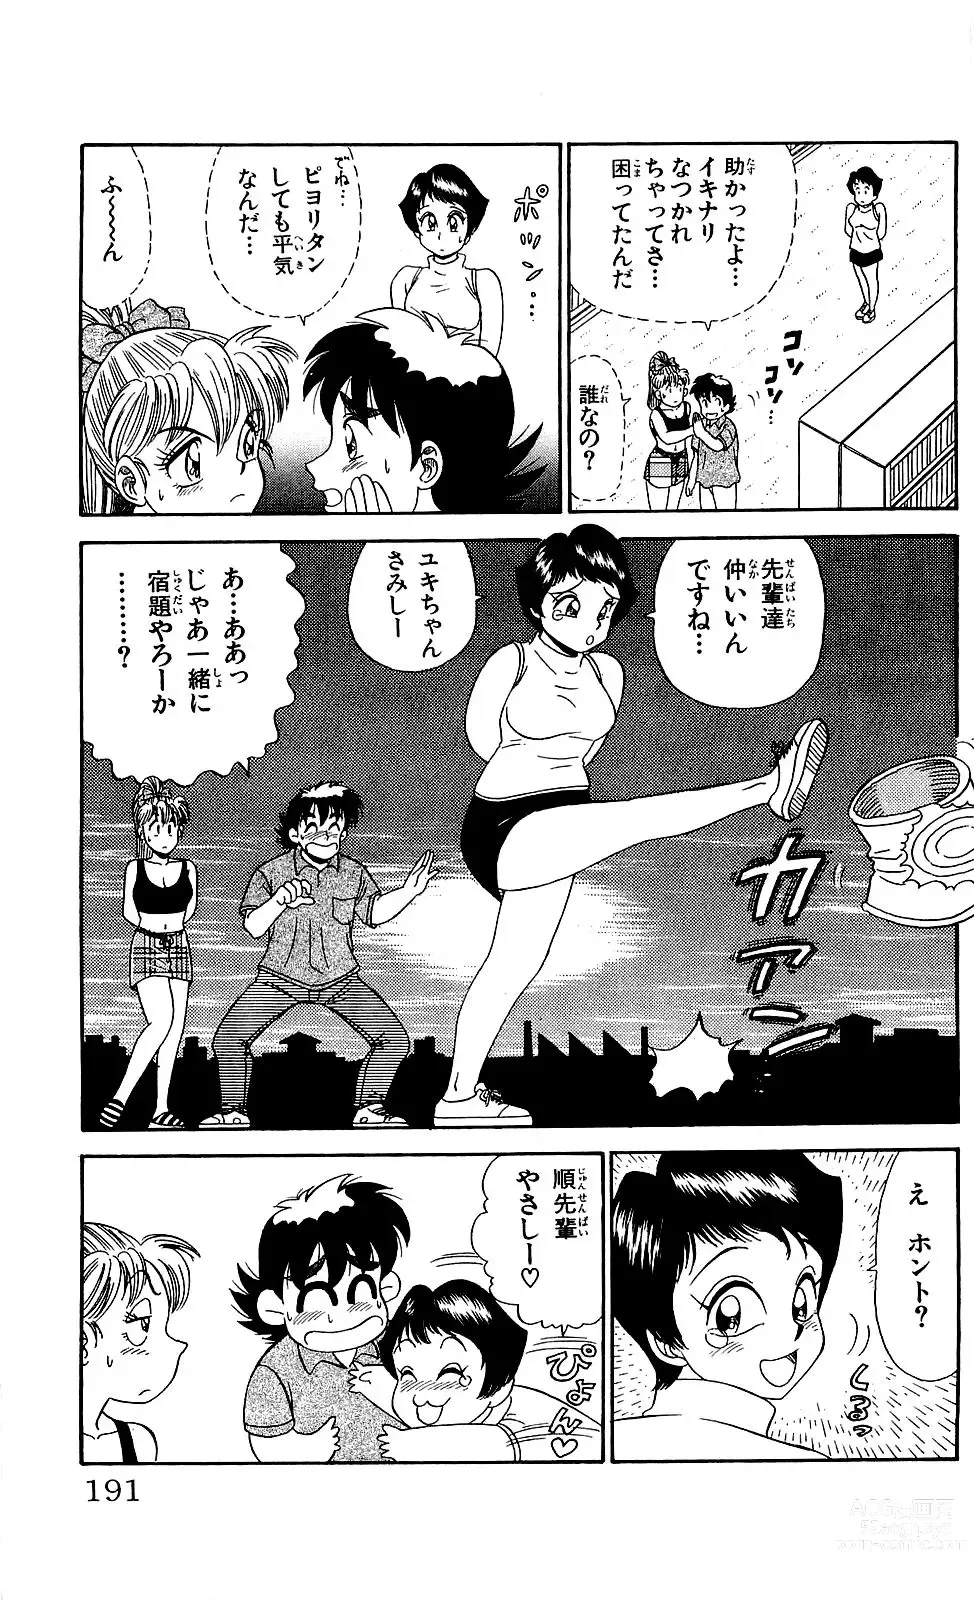 Page 189 of manga Orette Piyoritan Vol. 1